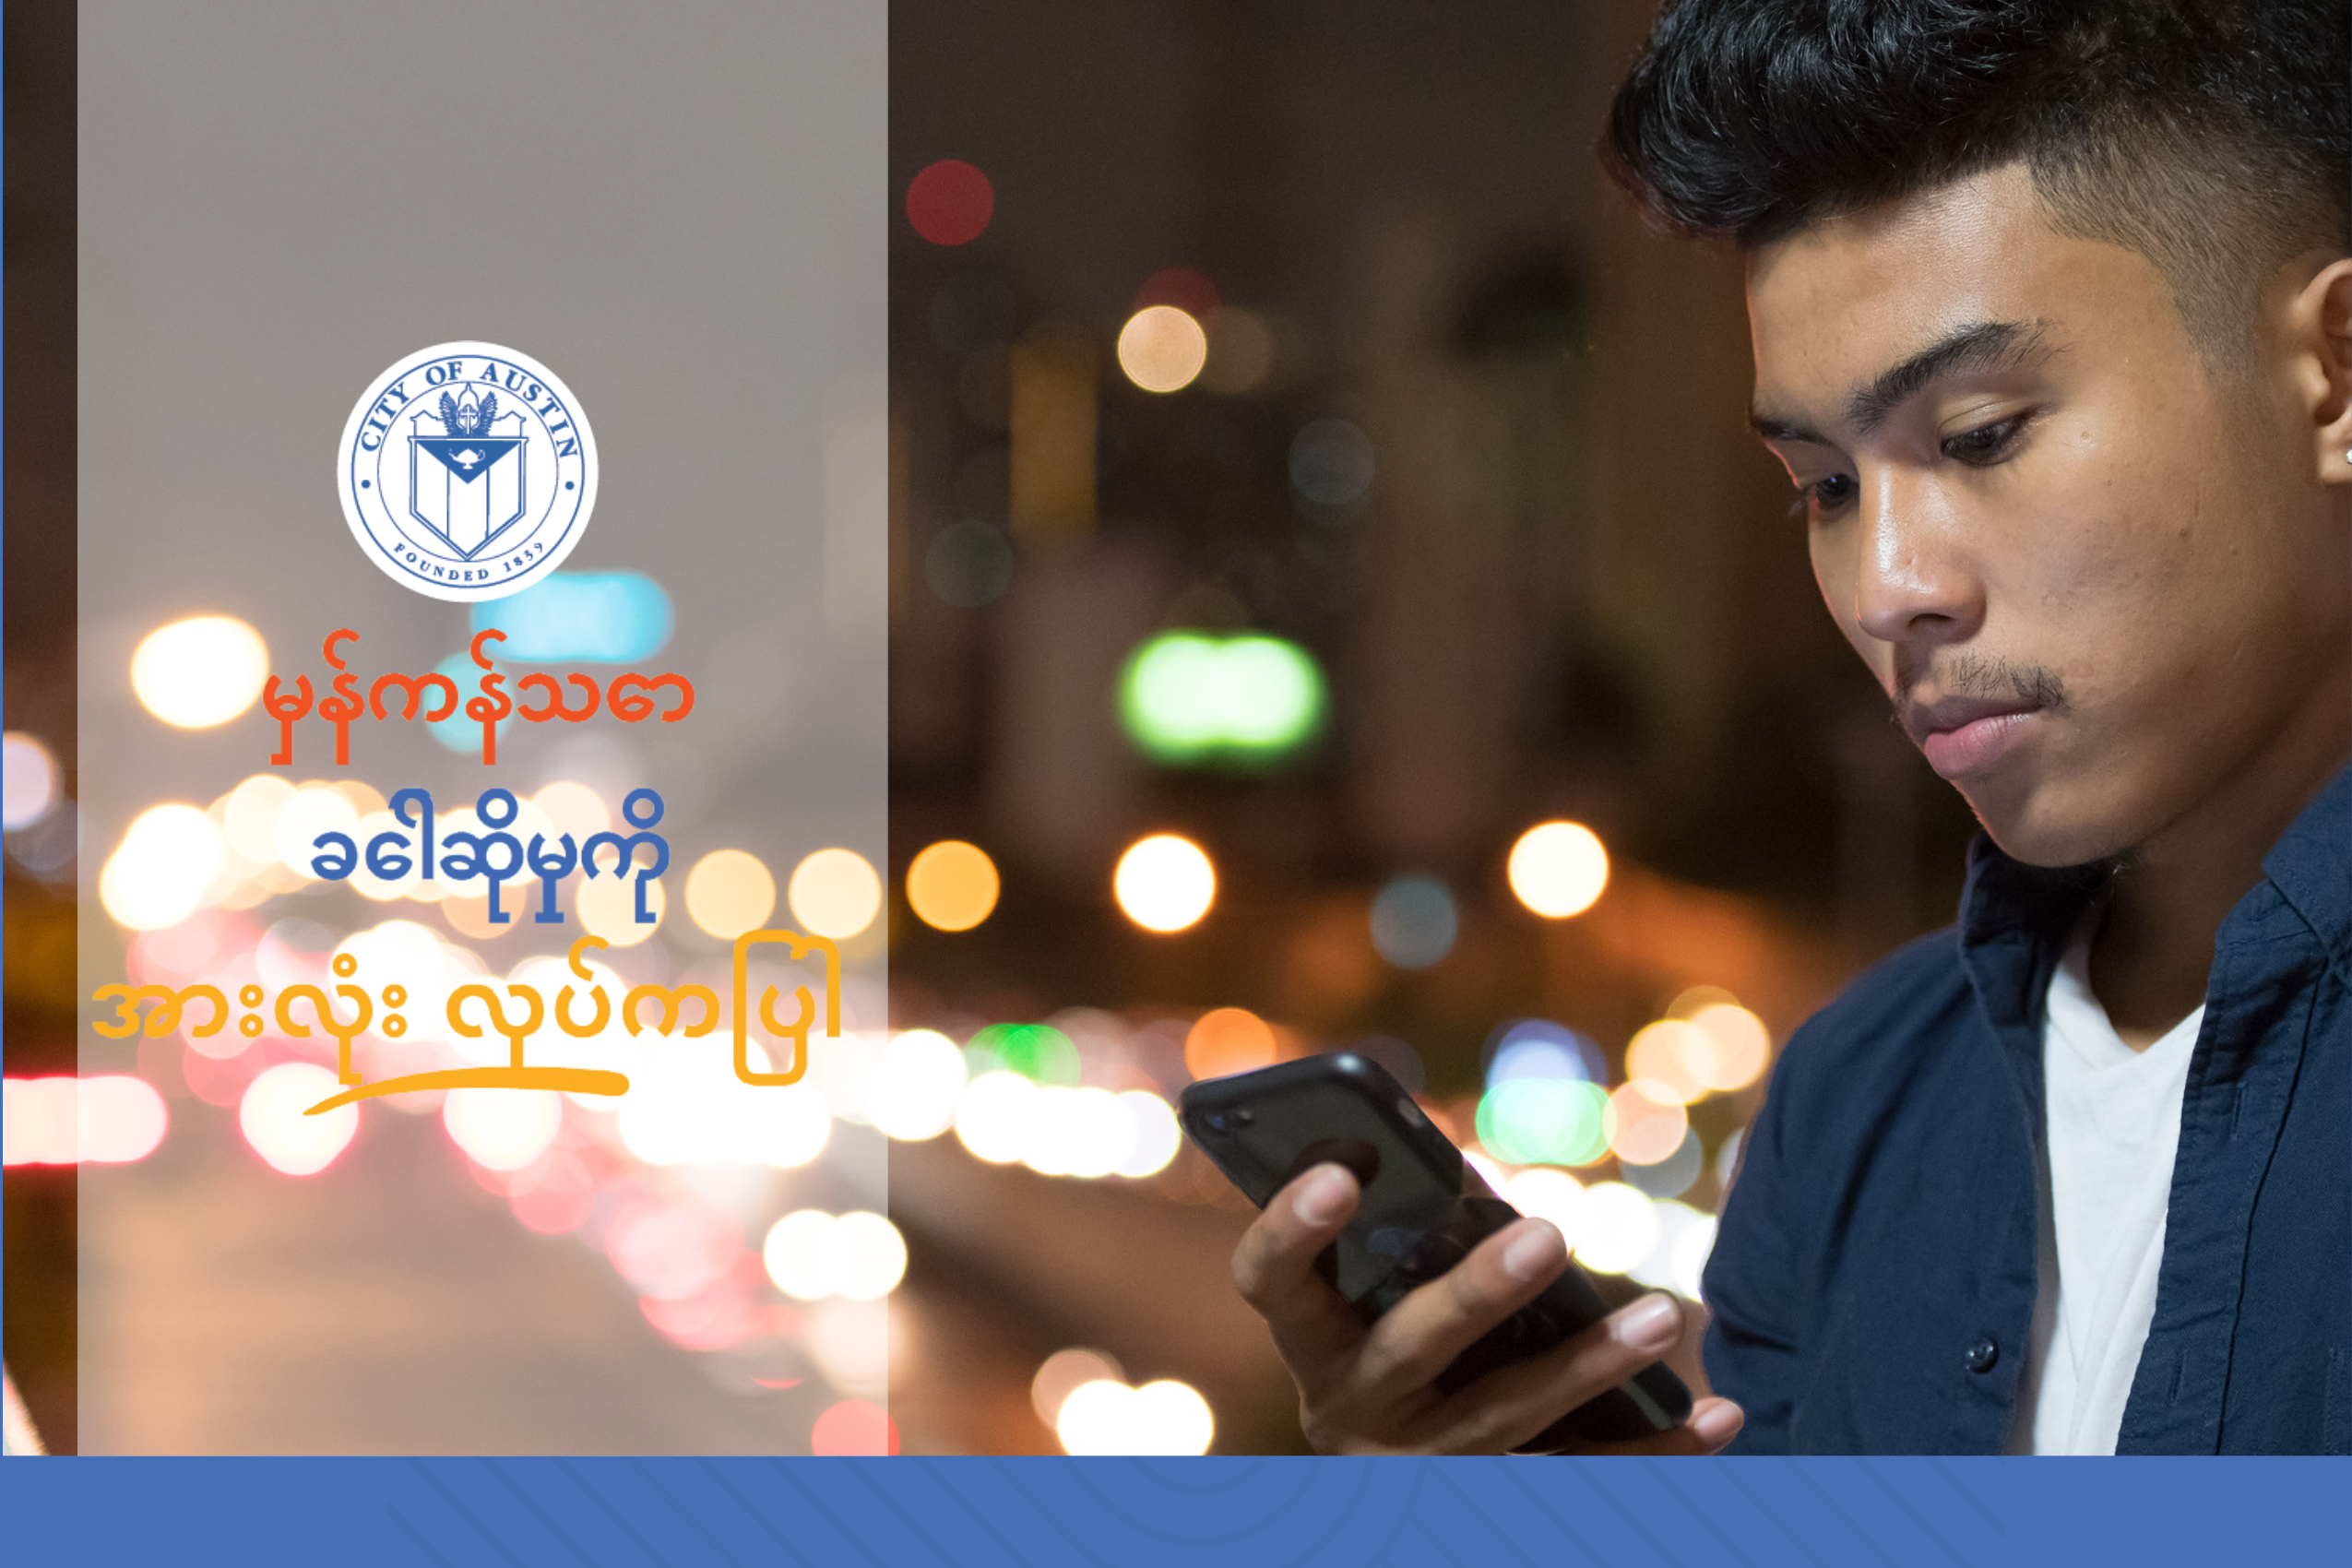 Make the right call promo banner-Burmese